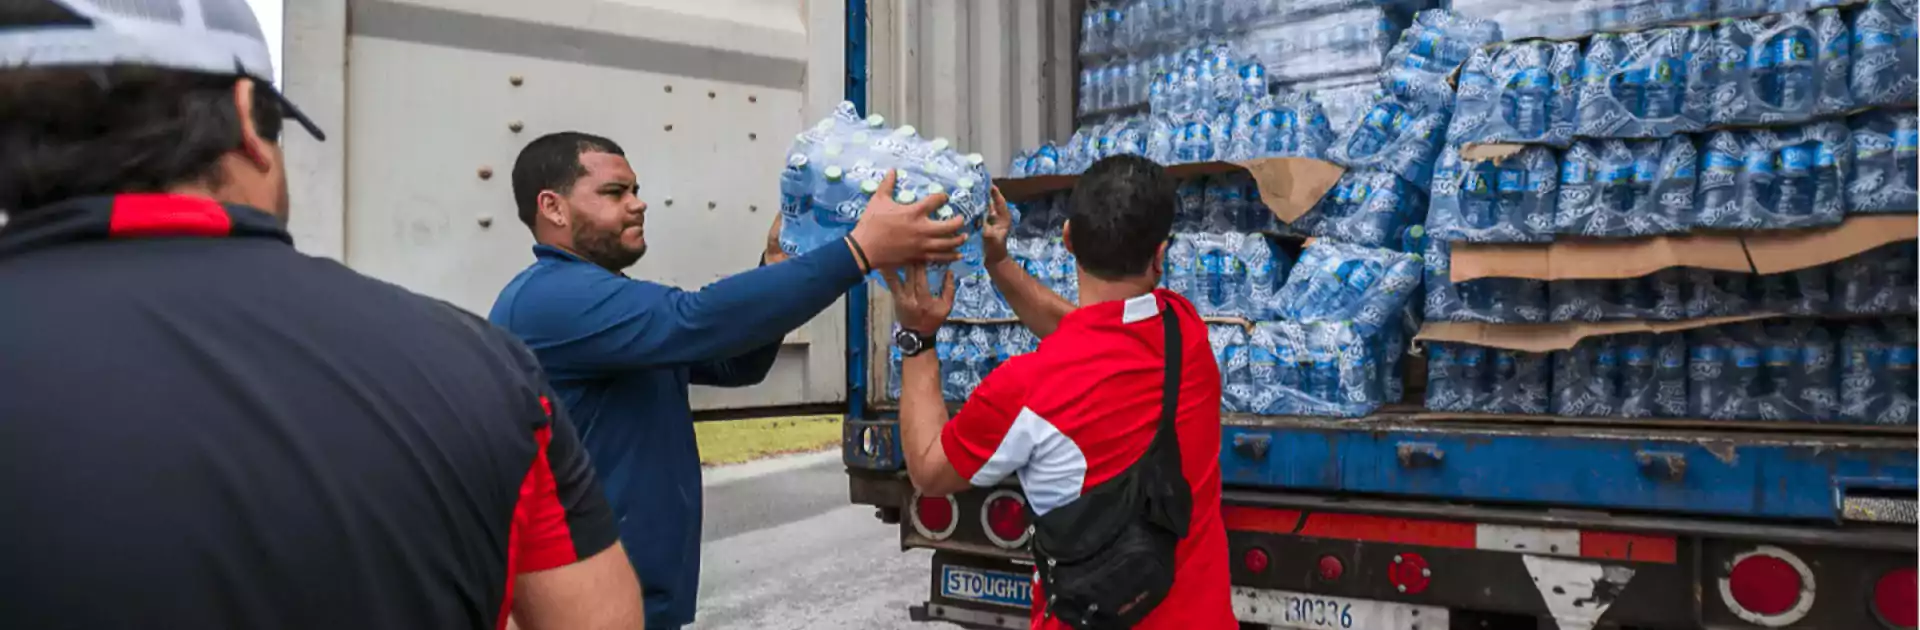 Hurricane Relief Workers Sharing Water Bottles